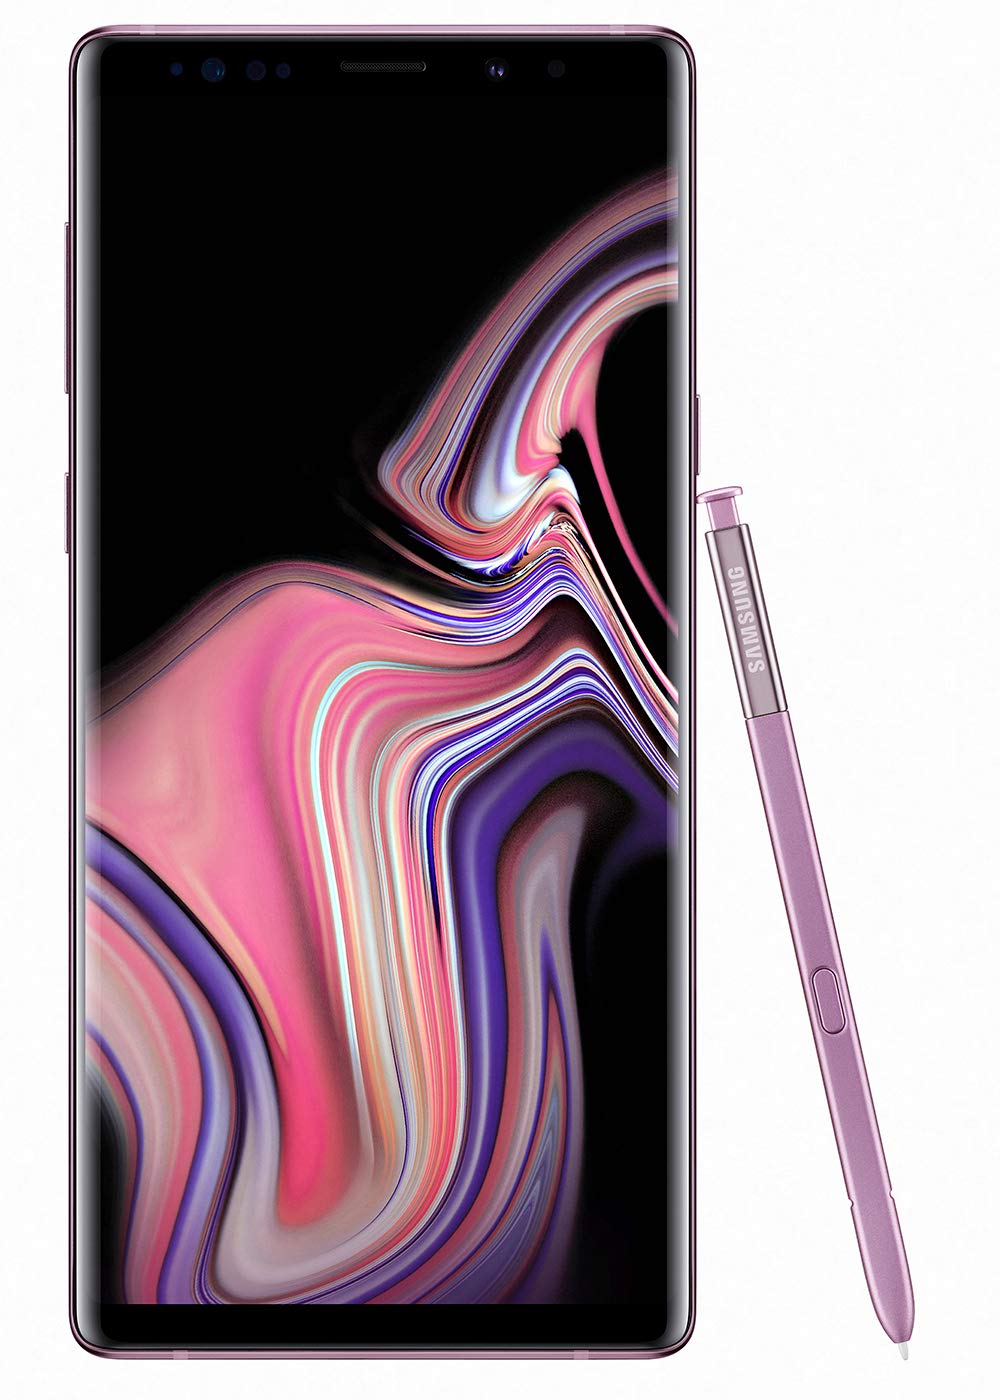 Samsung Galaxy Note 9 (SM-N960F/DS) 6GB / 128GB (Lavender Purple) 6.4-inches LTE Dual SIM (GSM ONLY, NO CDMA) Factory Unlocked - International Stock